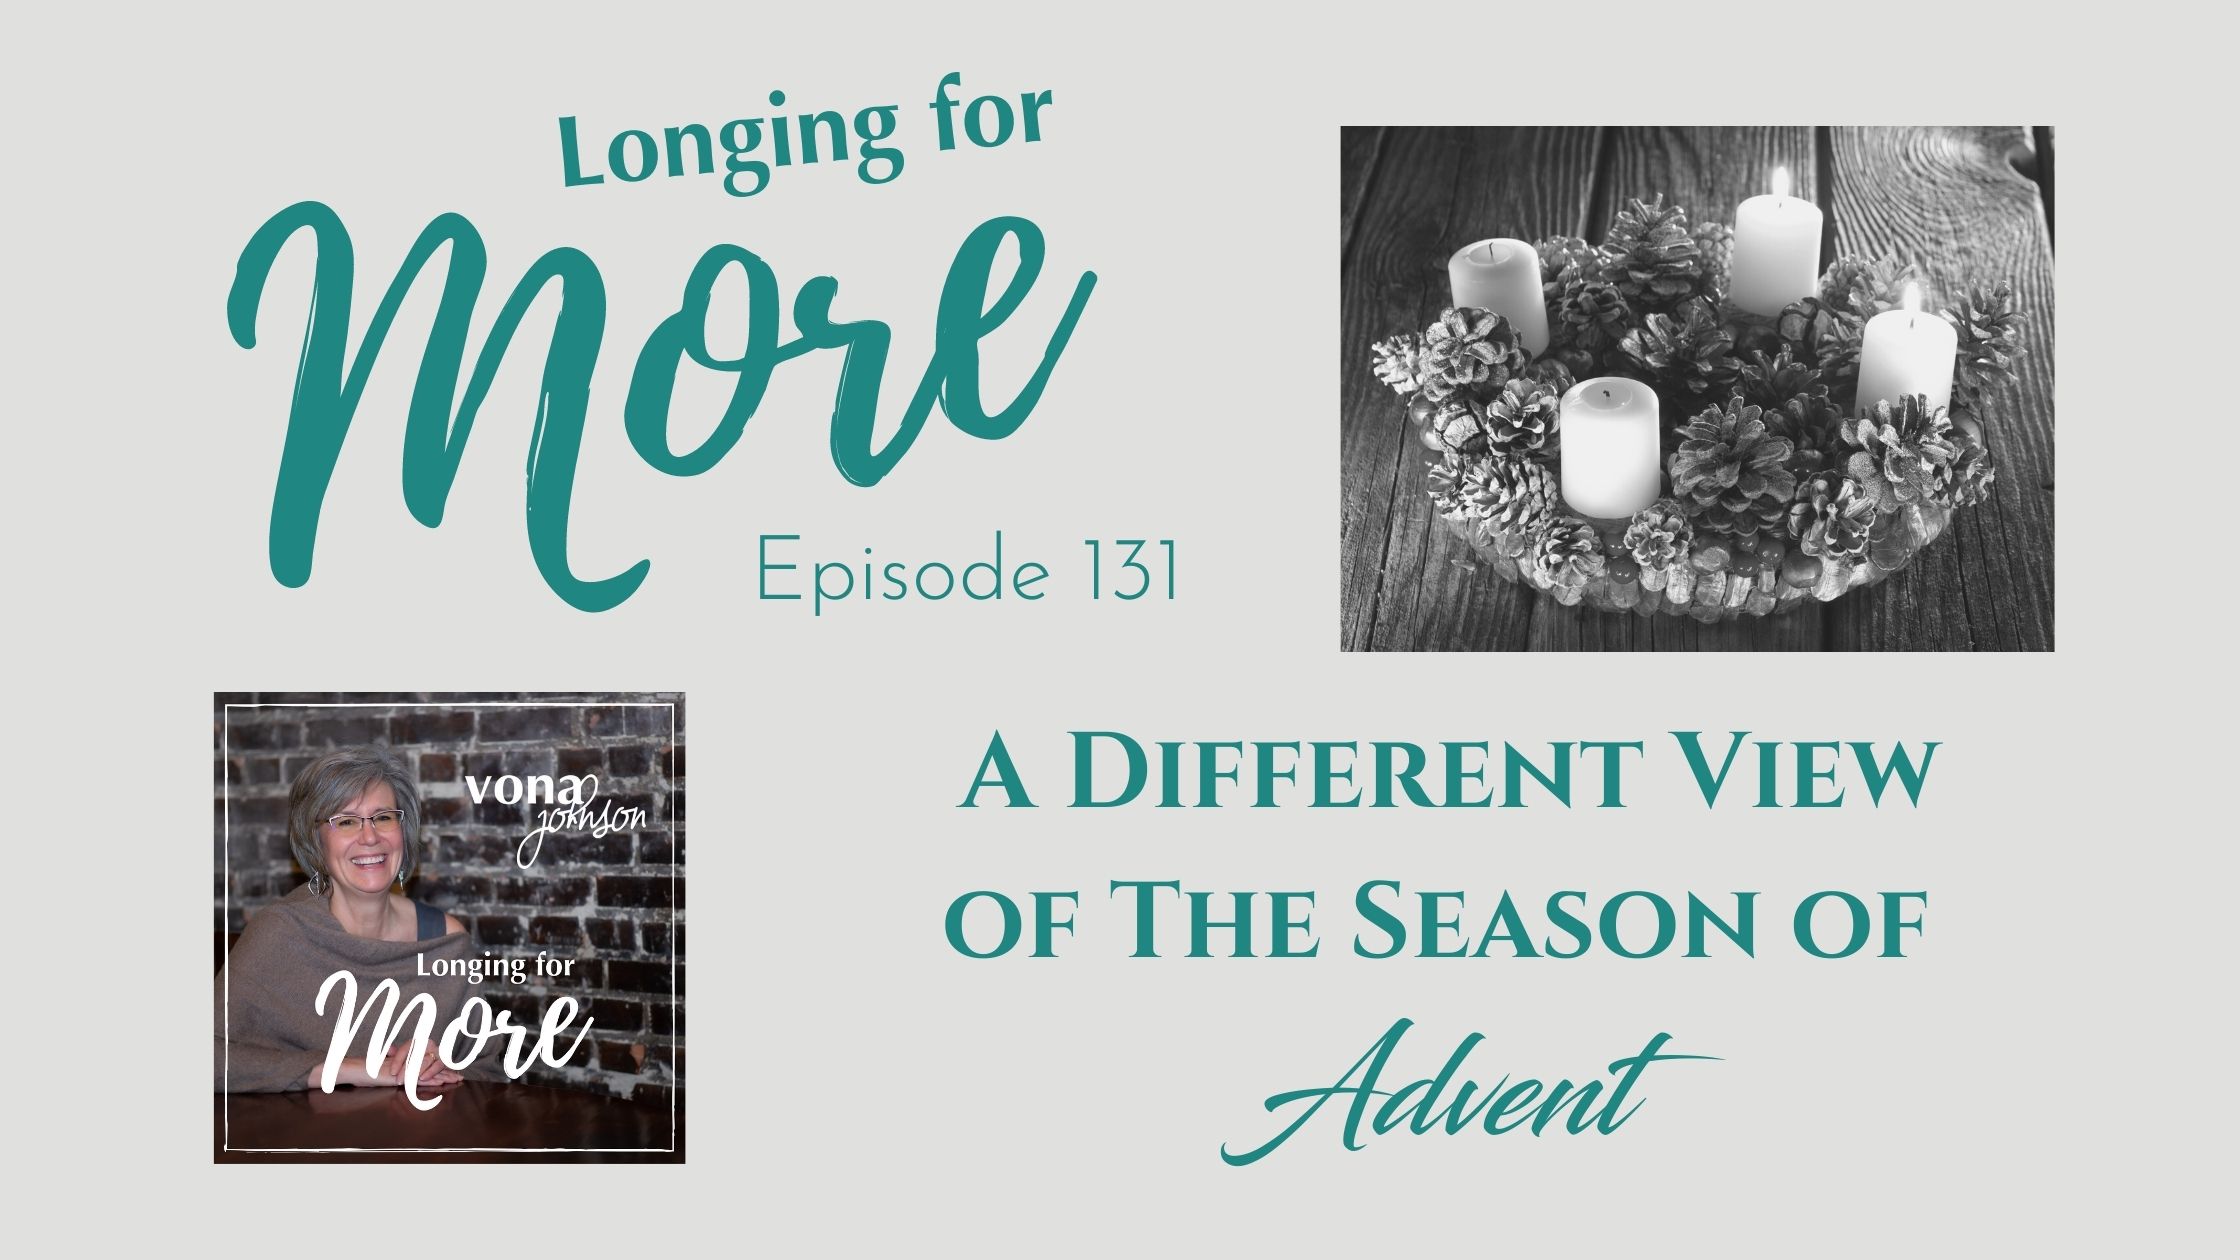 episode 131 banner - season of advent